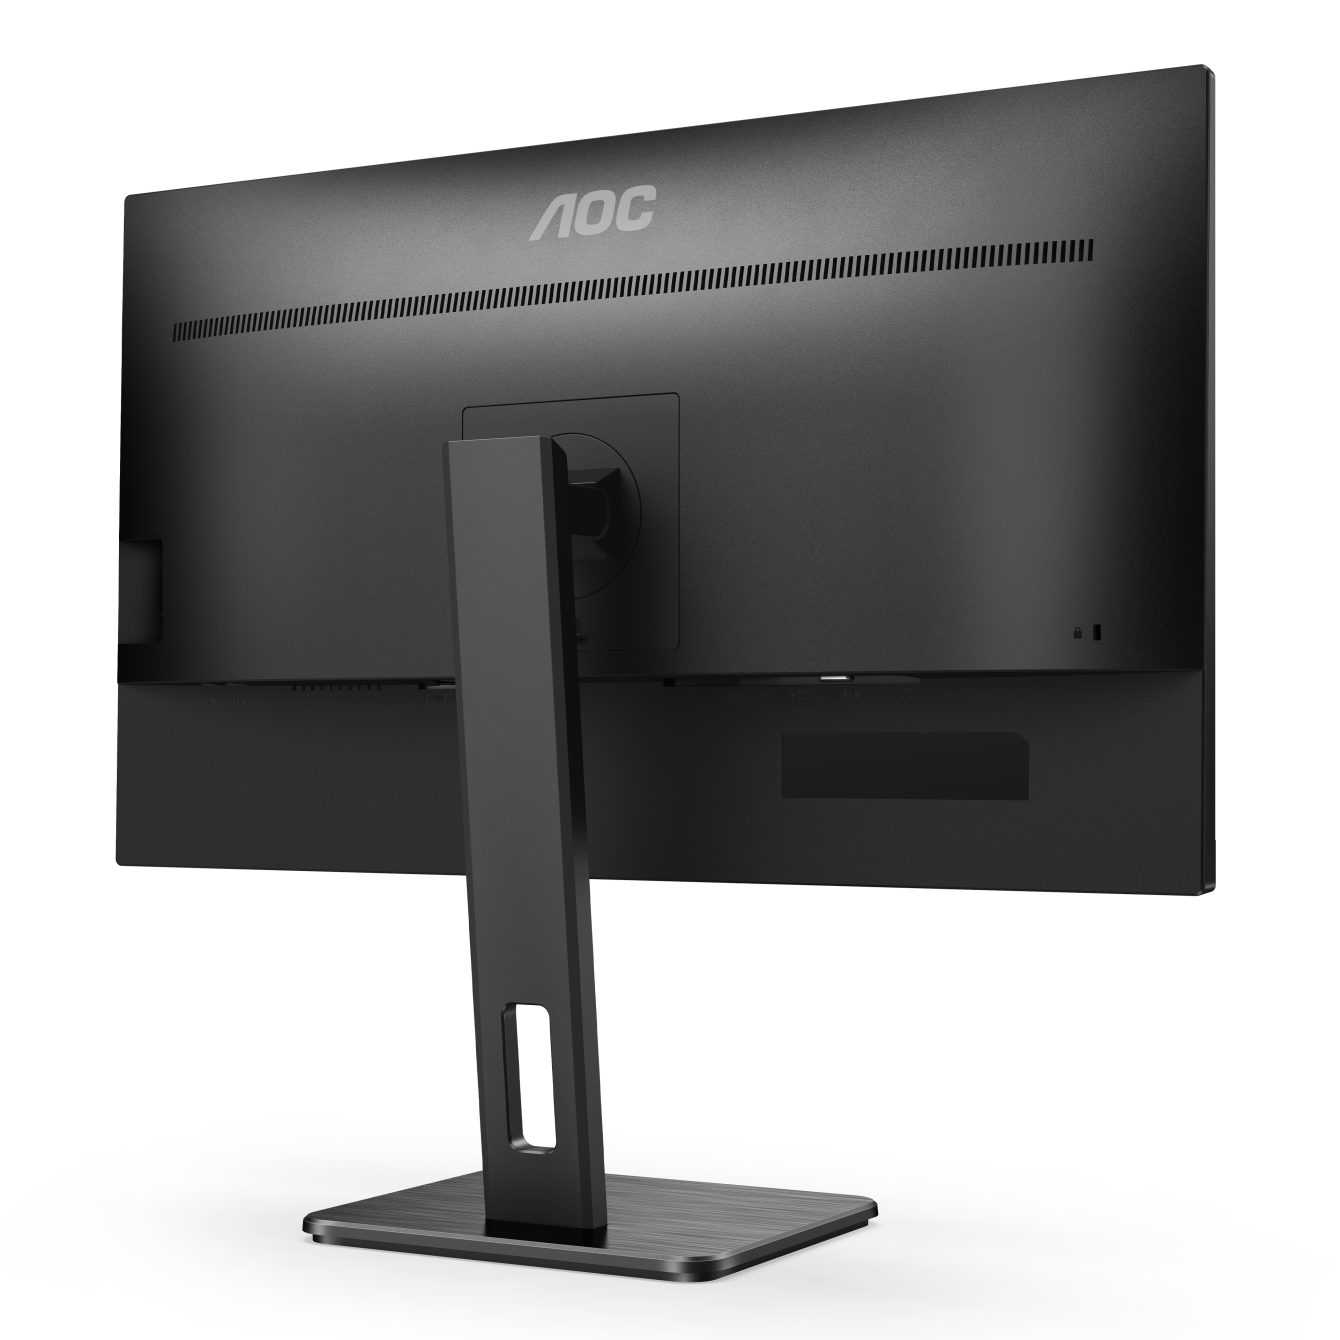 AOC expands its line of P2 professional monitors